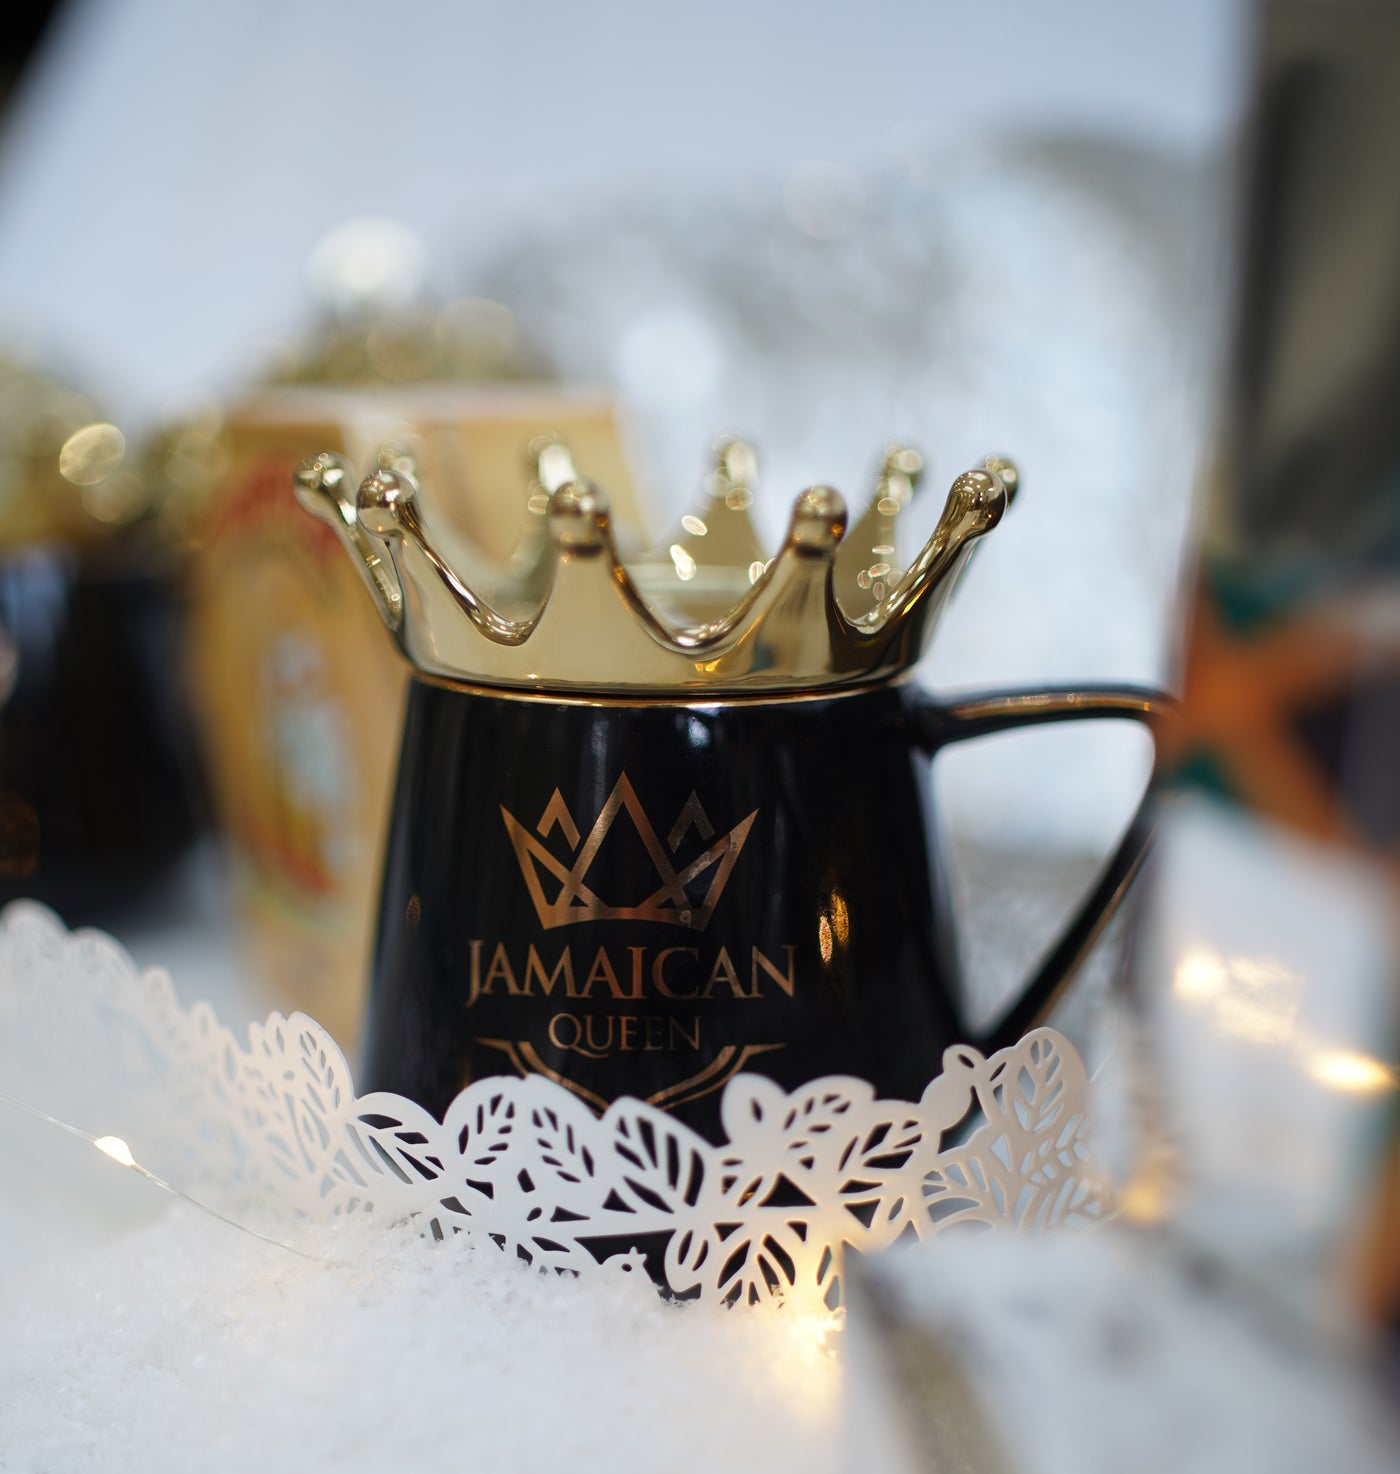 Jamaican Queen Mug and Herbal Tea